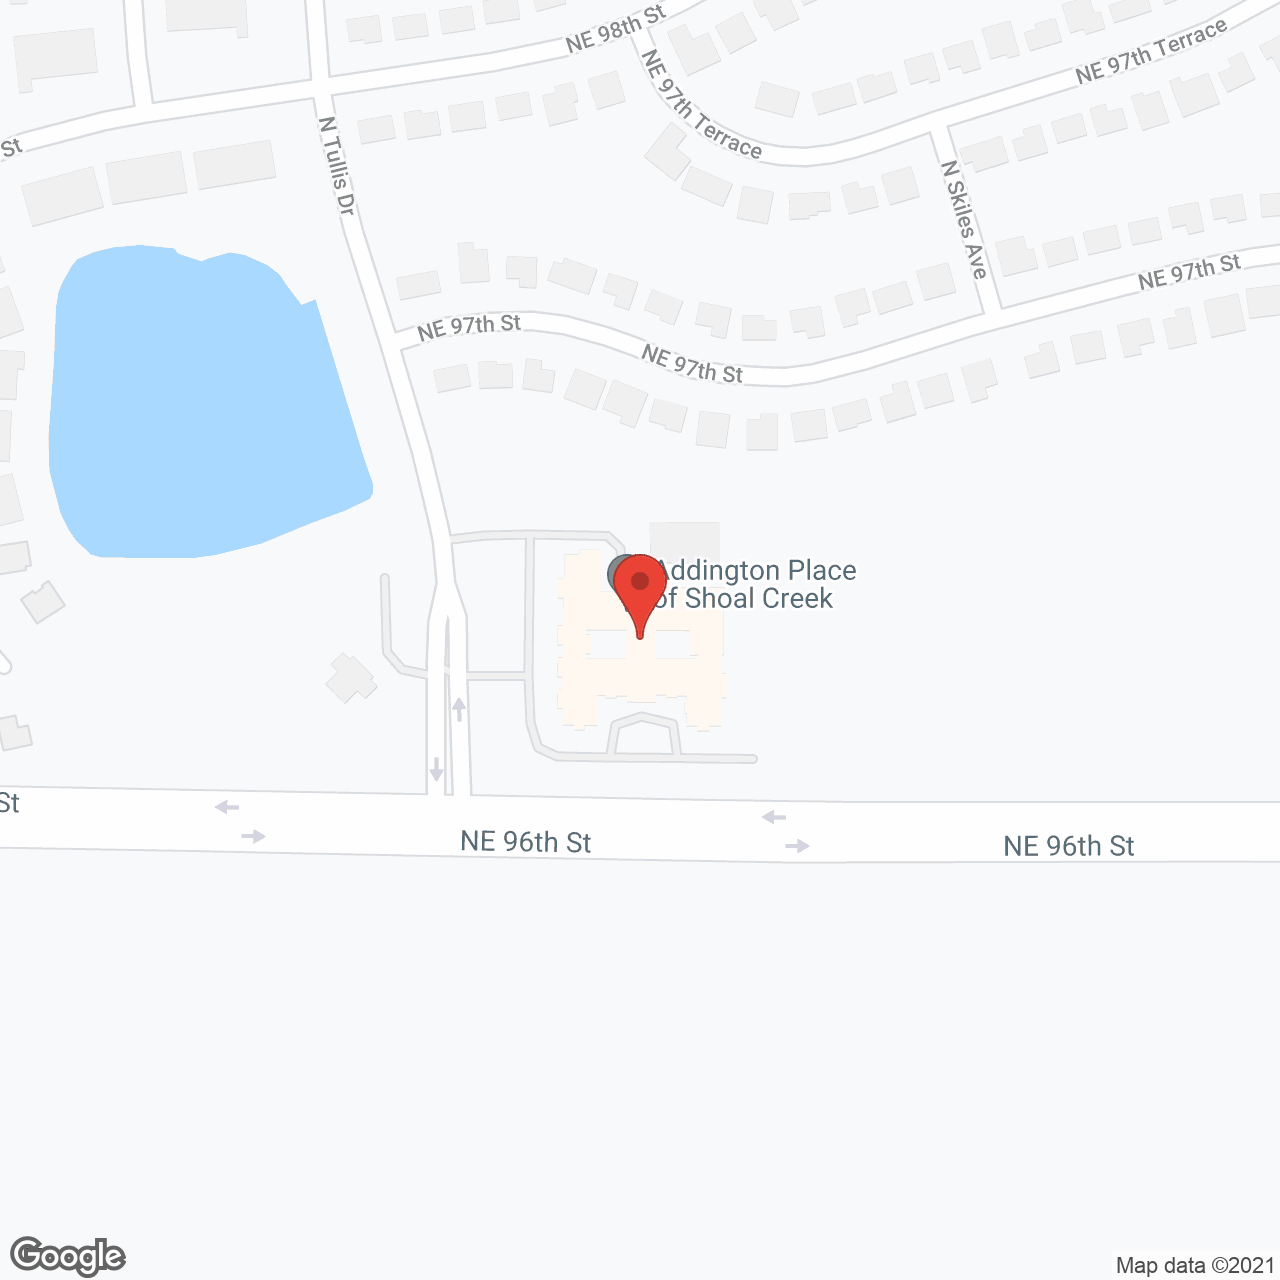 Addington Place of Shoal Creek in google map